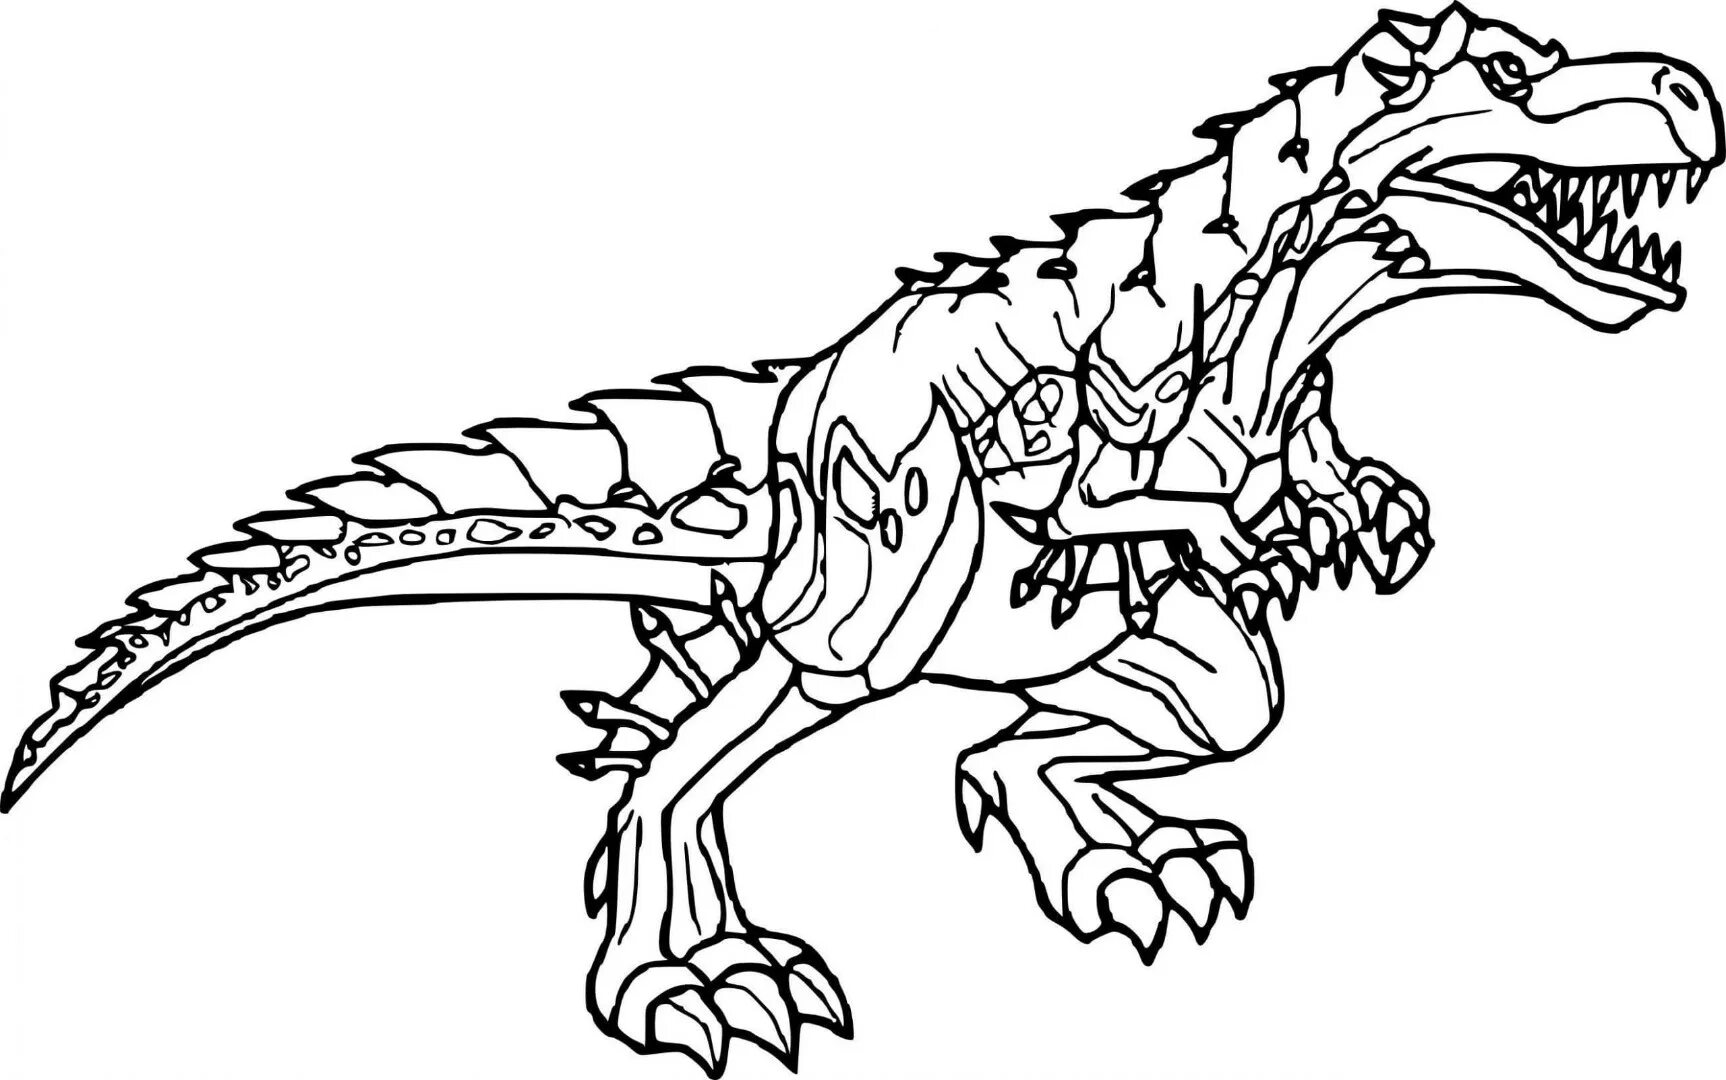 Dino rex #4